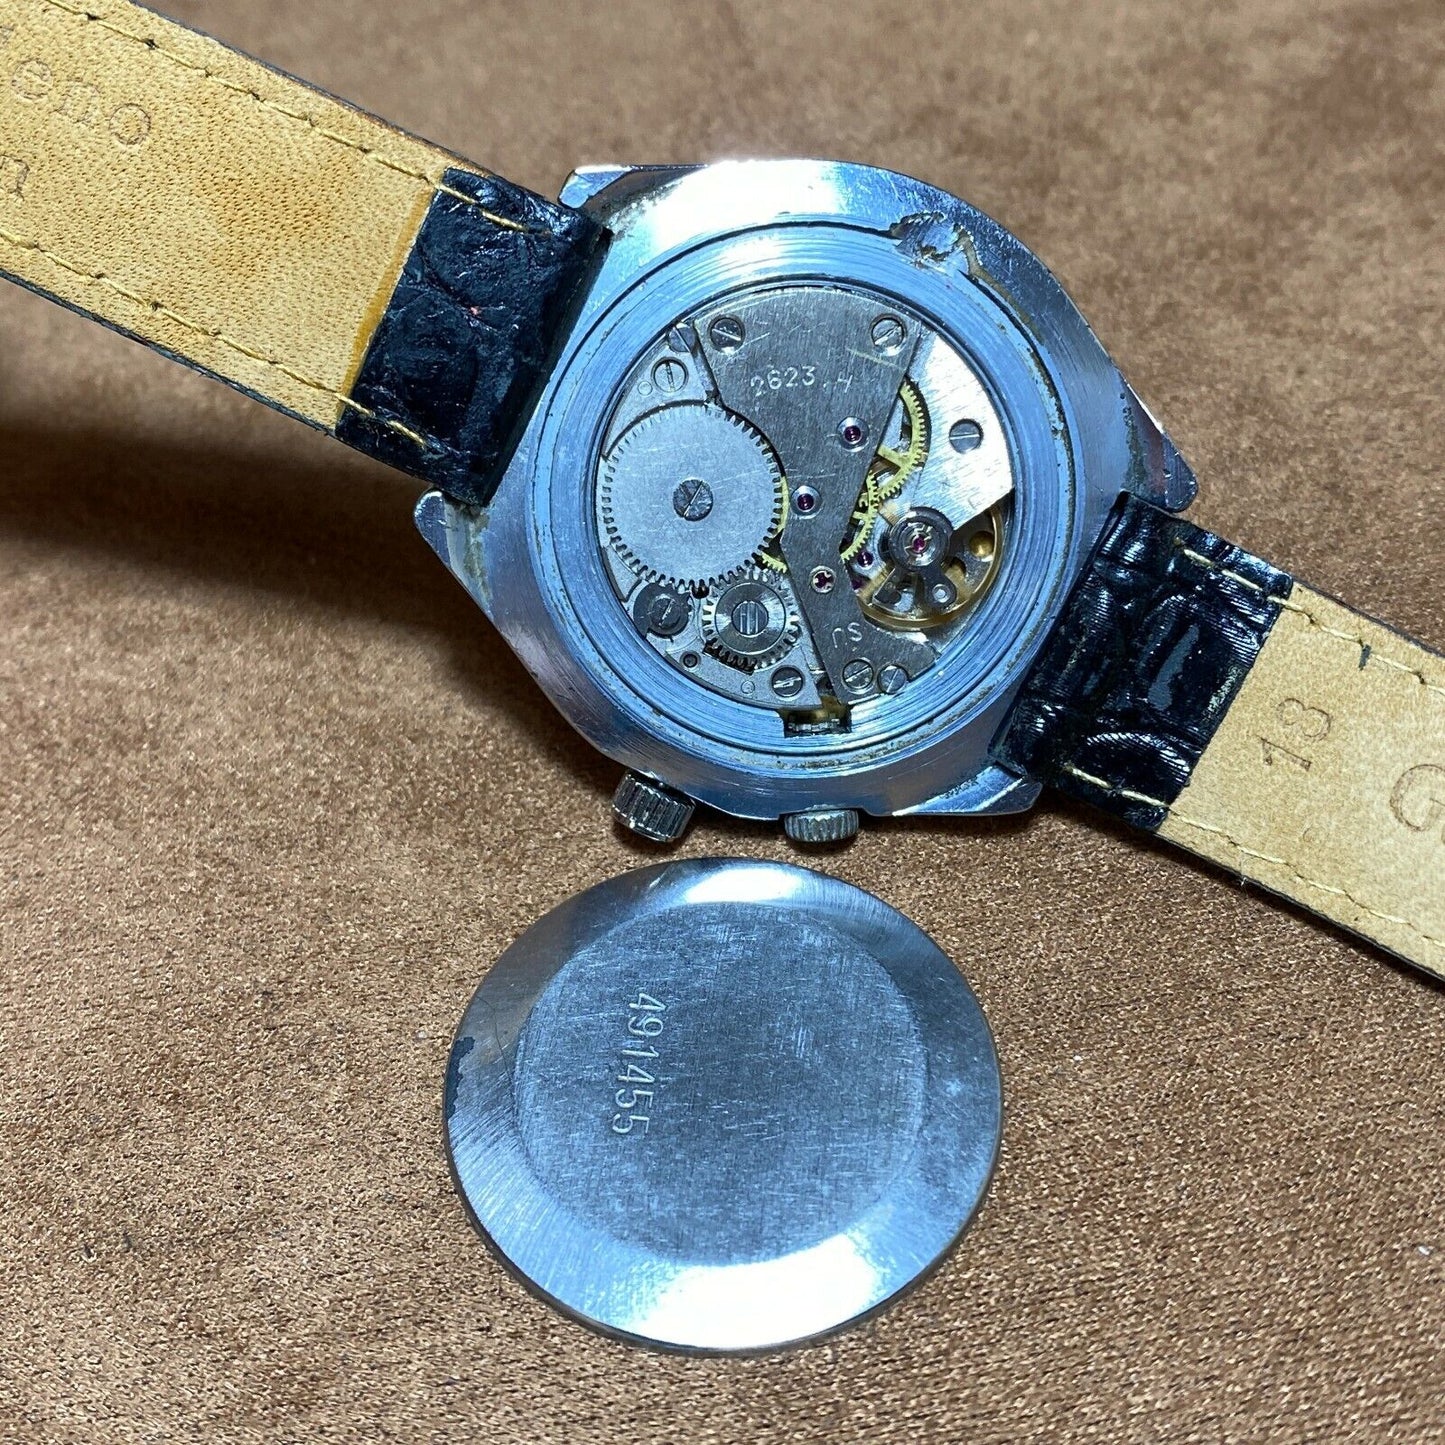 Soviet Vintage Watch RAKETA 24 HOURS Antarctic POLAR NAVY 2623 H USSR Watch